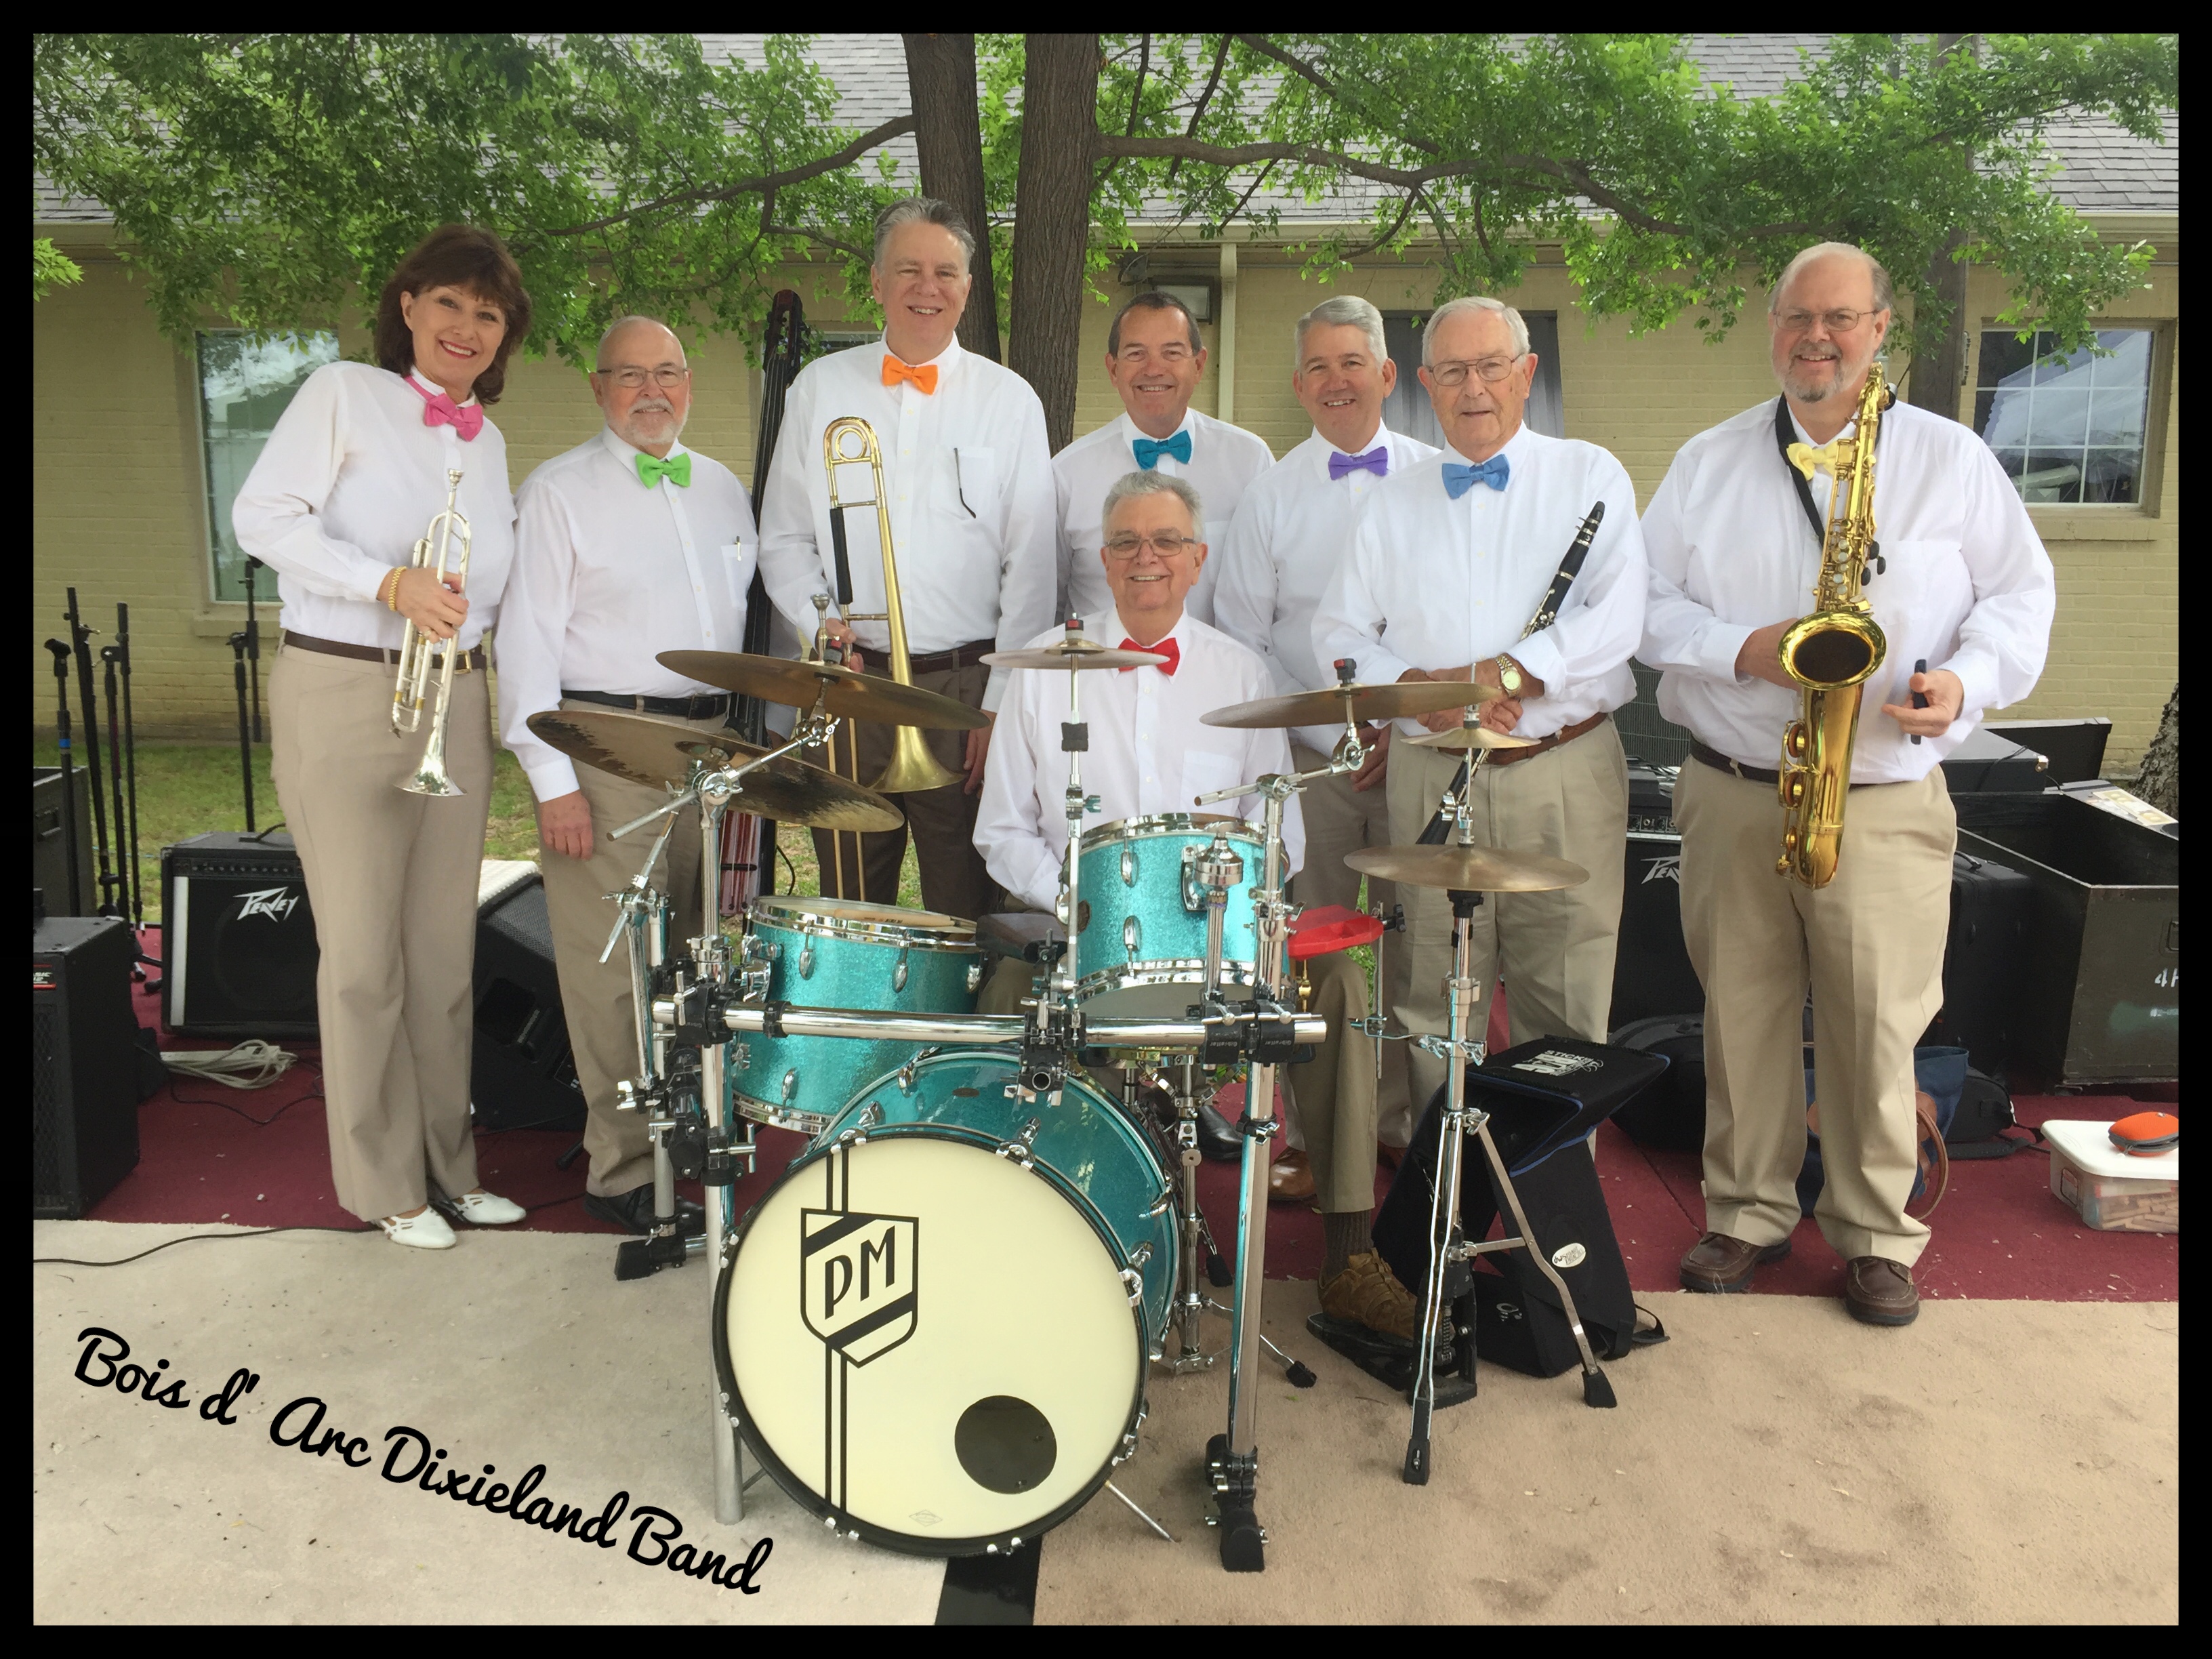 The Dixieland Band